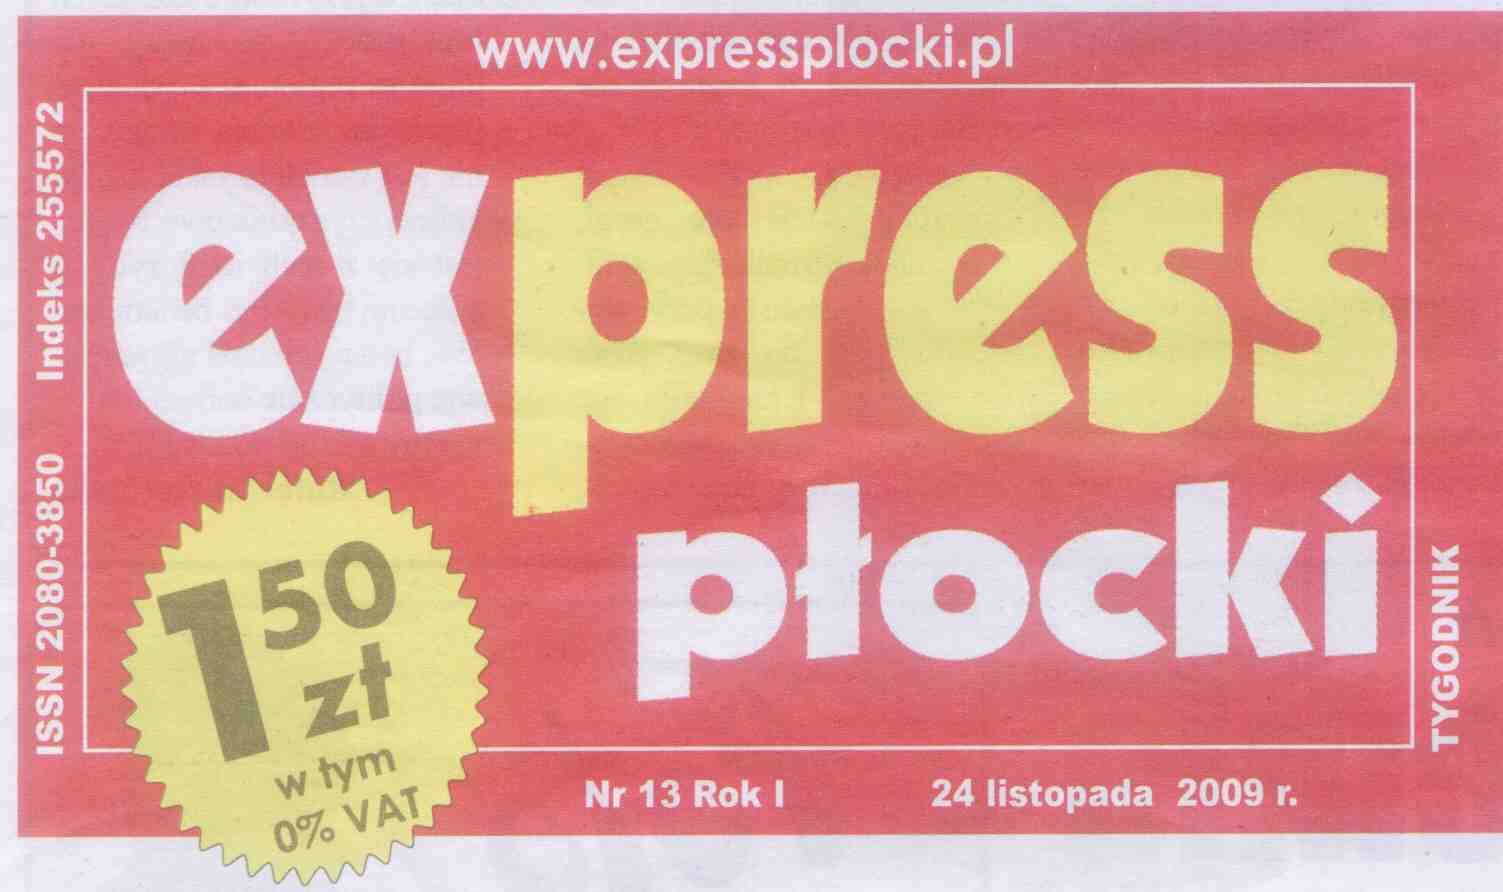 Express Płocki